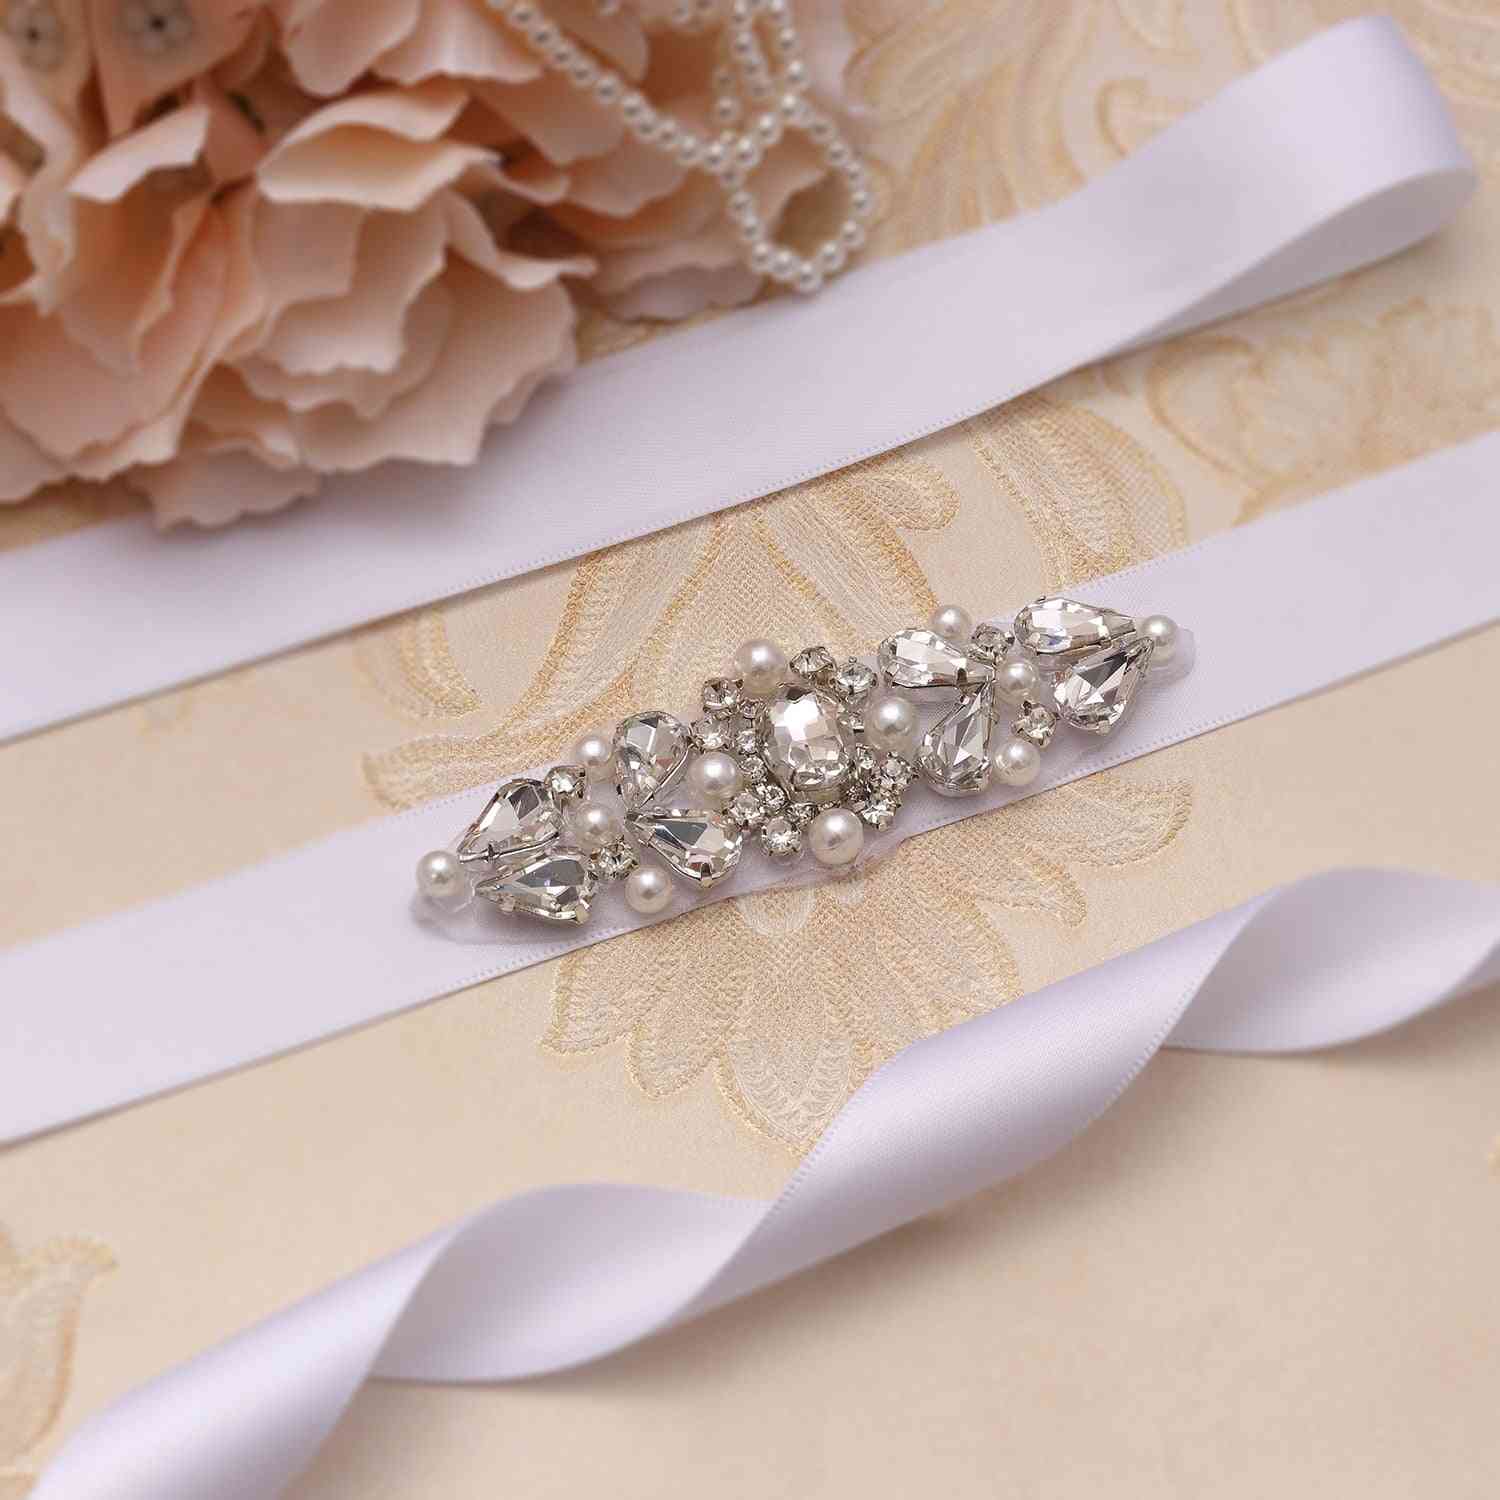 Silver Crystal Pearls Belt - Bridal Dress Accessories